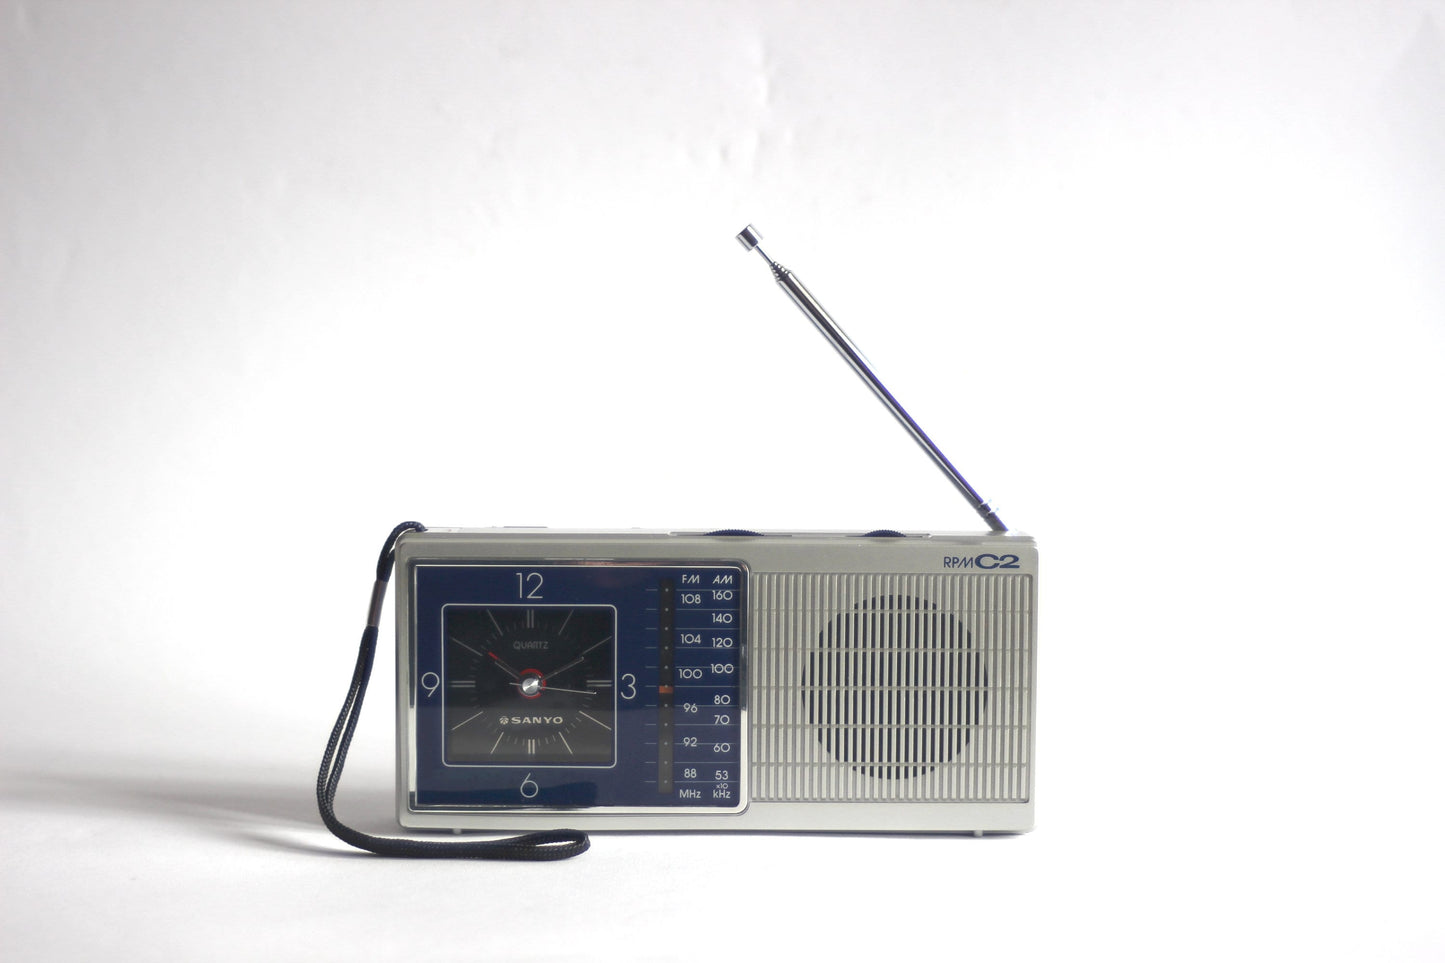 SANYO am/fm radio with alarm clock mod. RPM-C2. Japan 1985